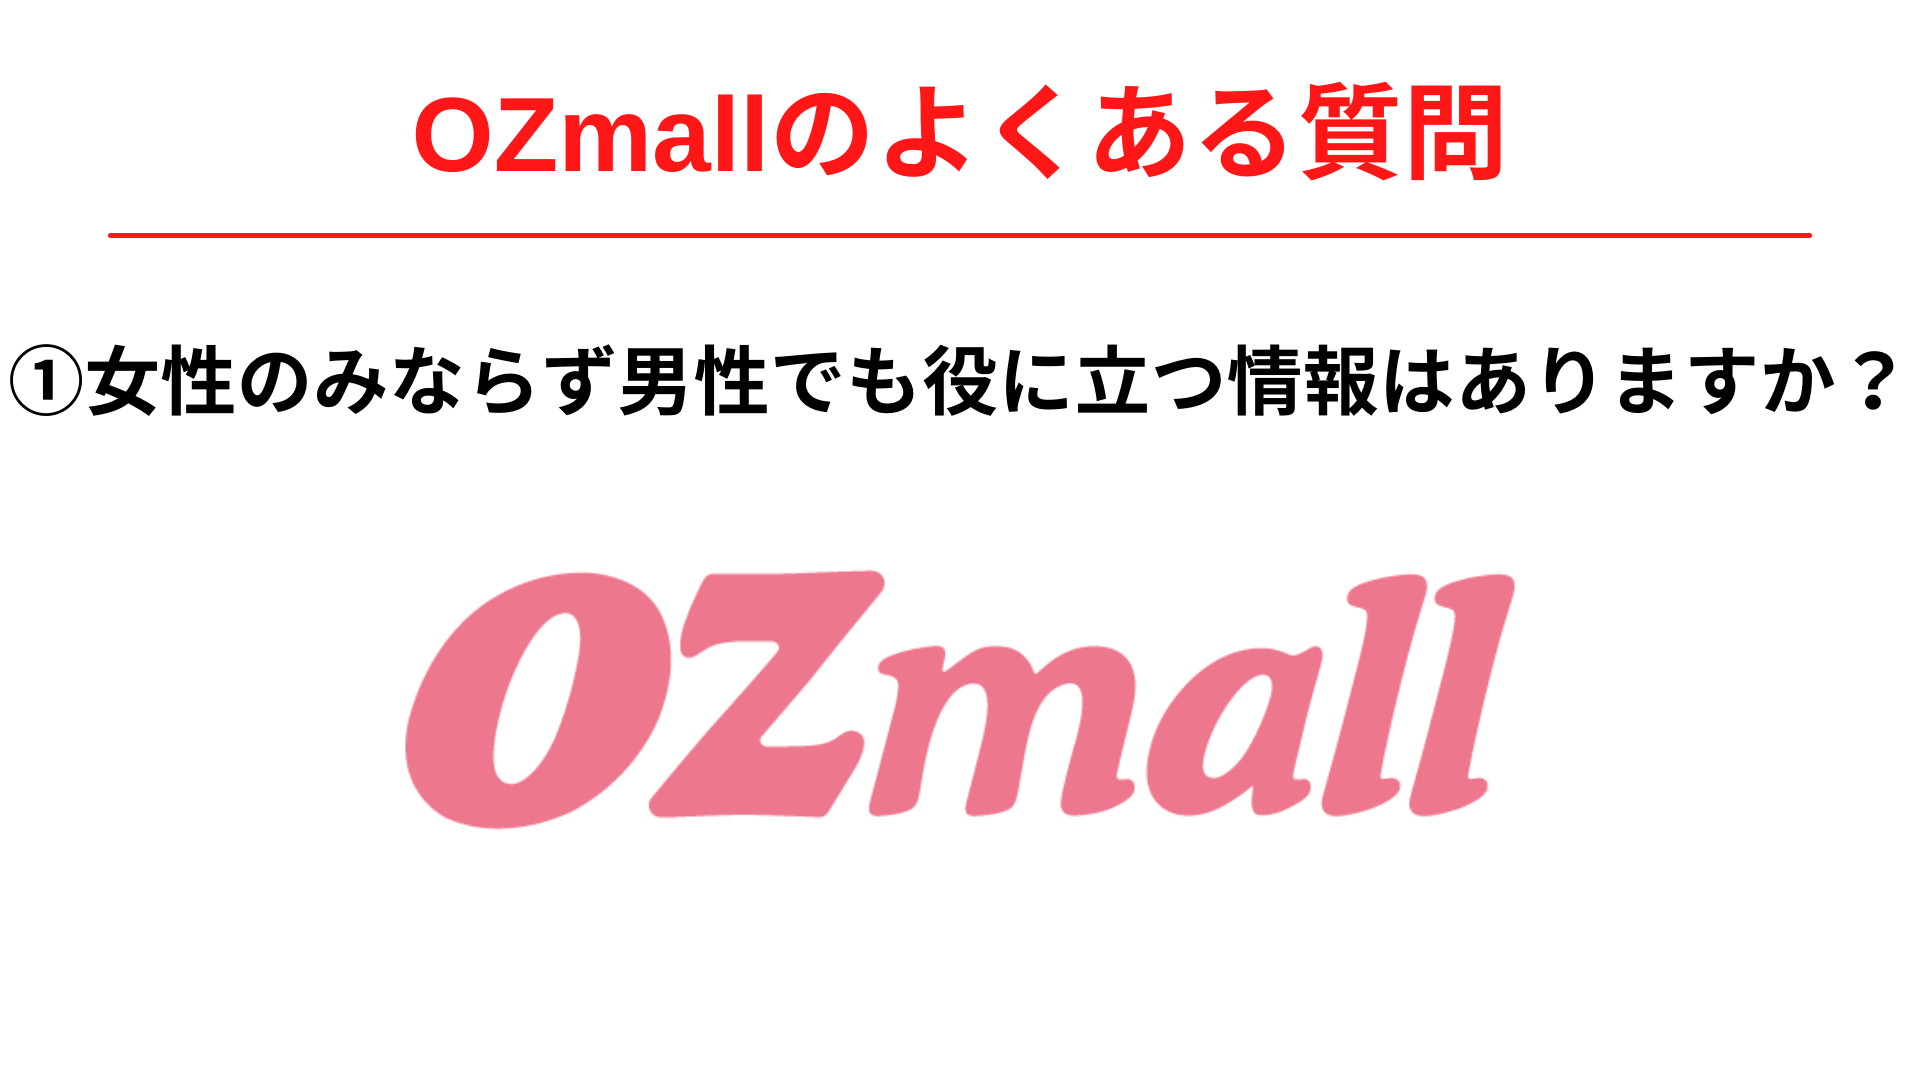 OZmall(オズモール)は女性のみならず男性でも役に立つ情報はありますか？